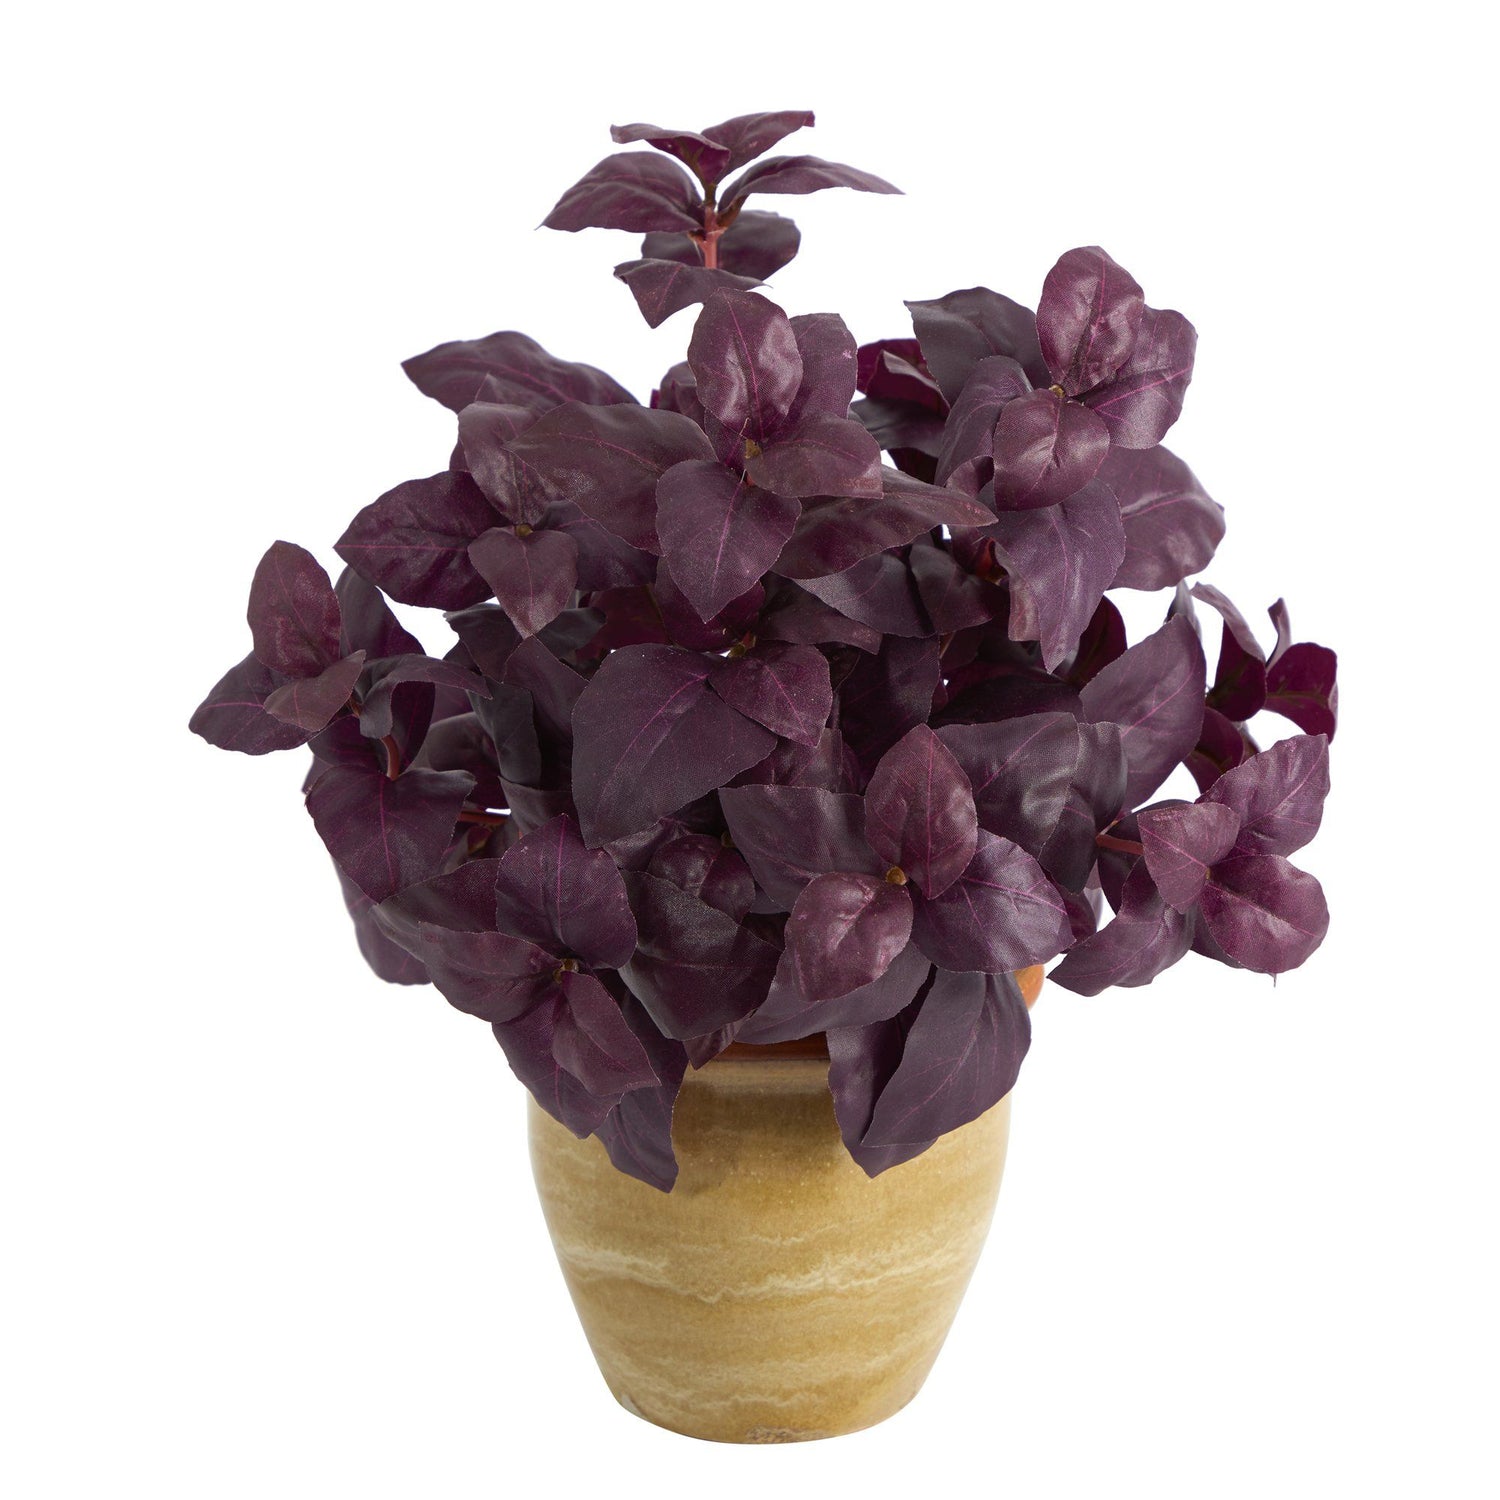 12” Basil Artificial Plant in Ceramic Planter